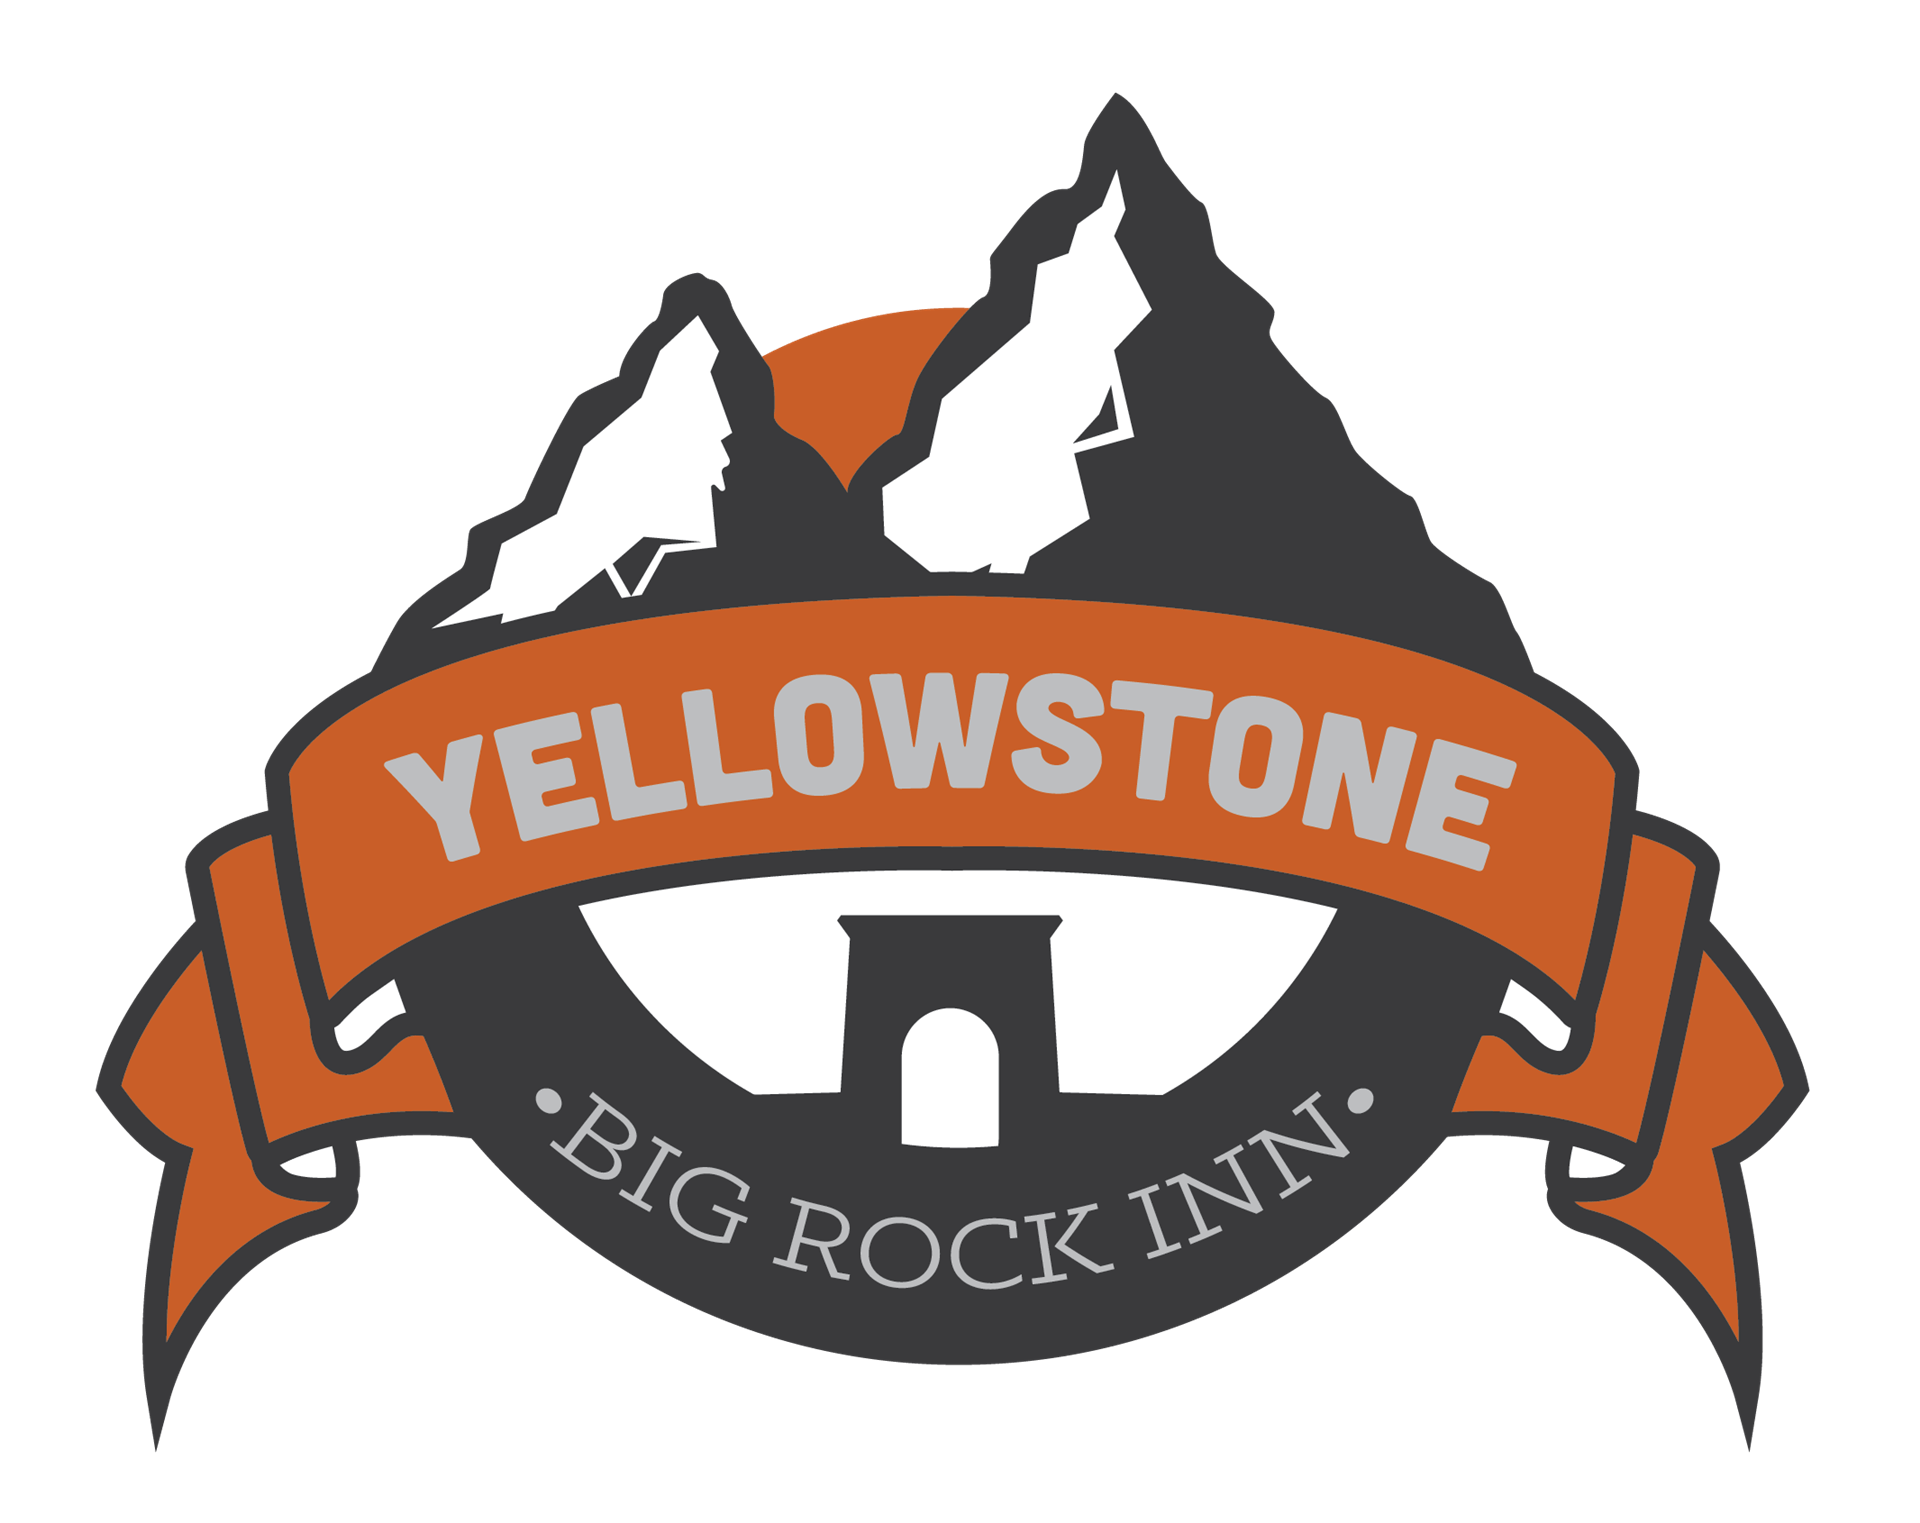 Yellowstone Logo - Yellowstone Big Rock Inn Official Site | Inns in Gardiner